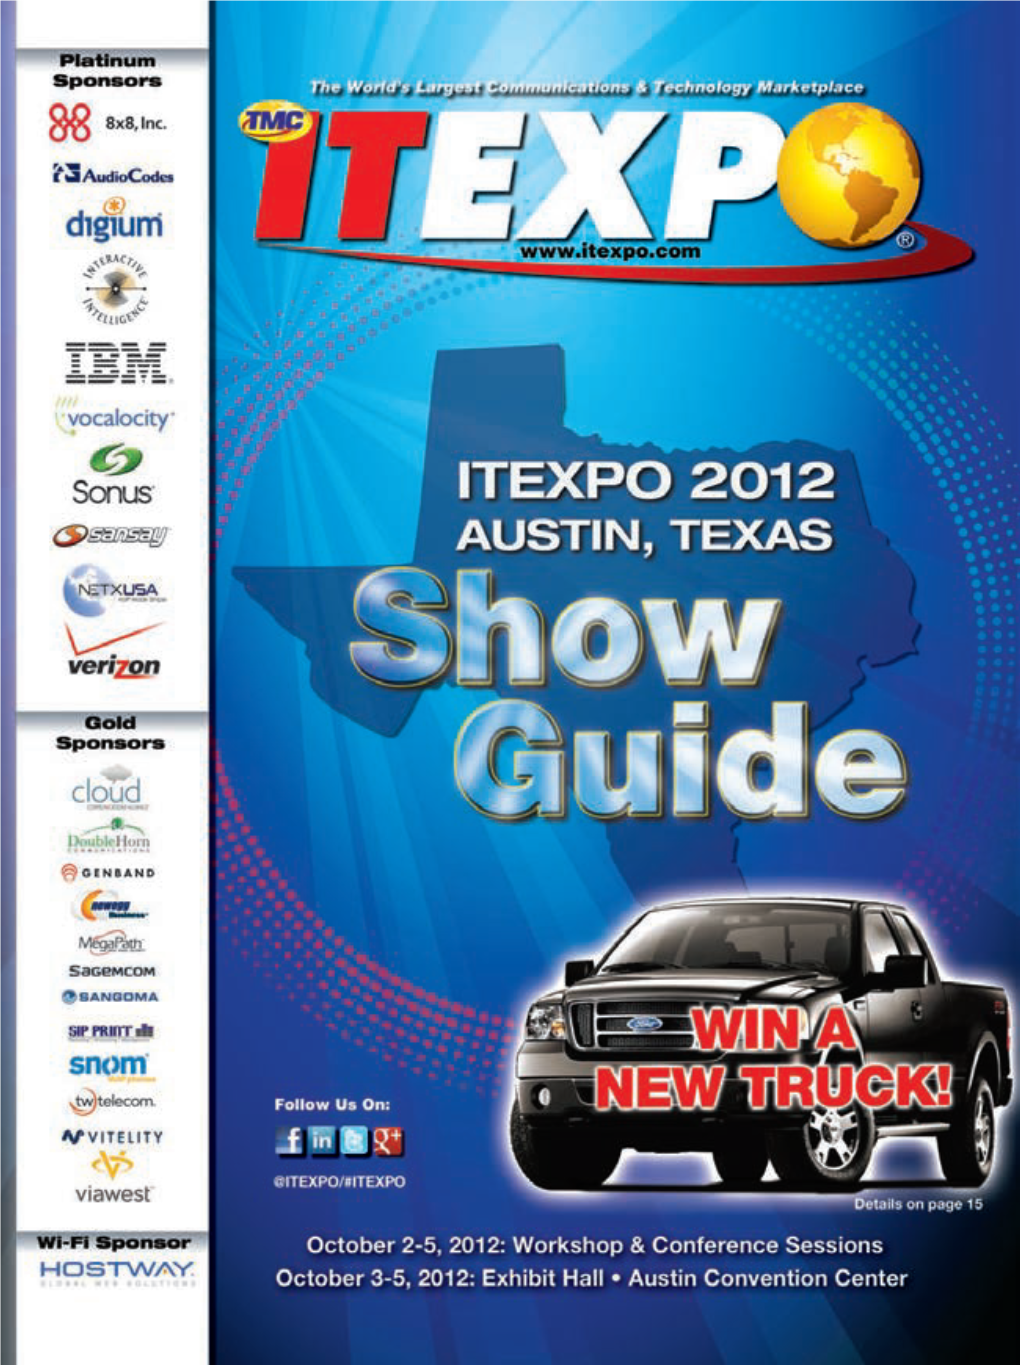 ITEXPO Austin Show Guide